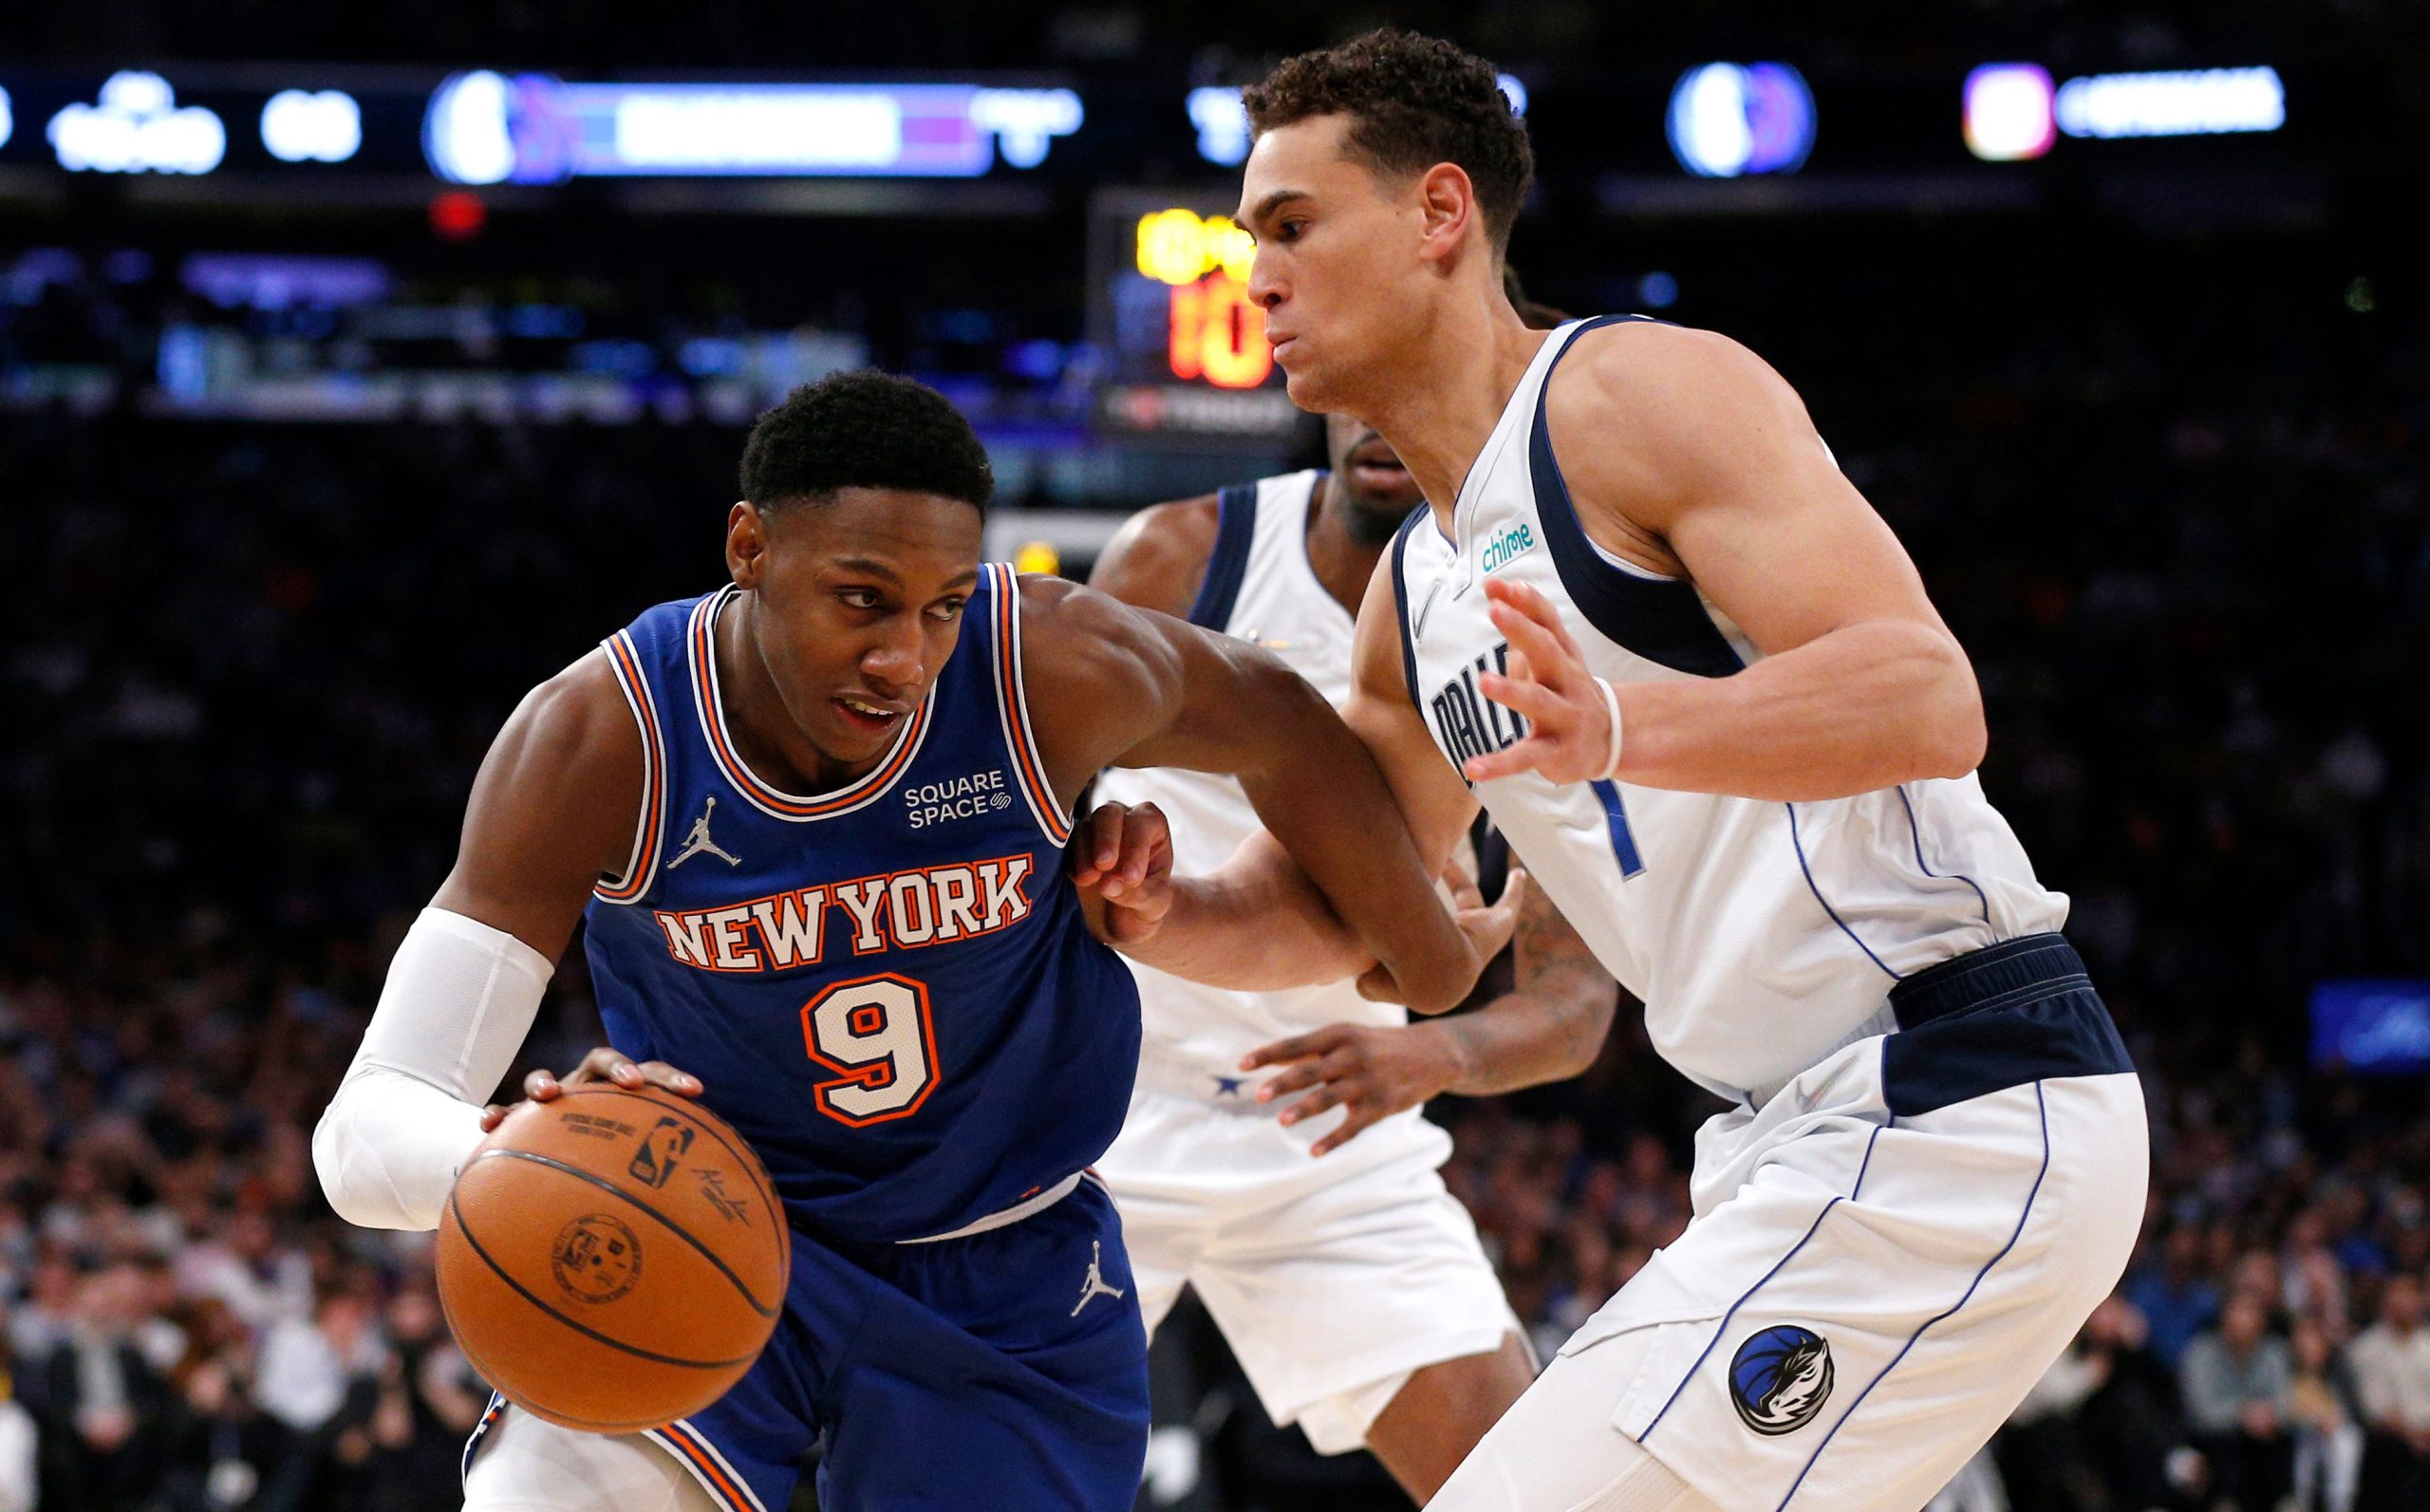 NBA: New York Knicks end Dallas Mavericks’ 6-game win streak with 108-85 victory